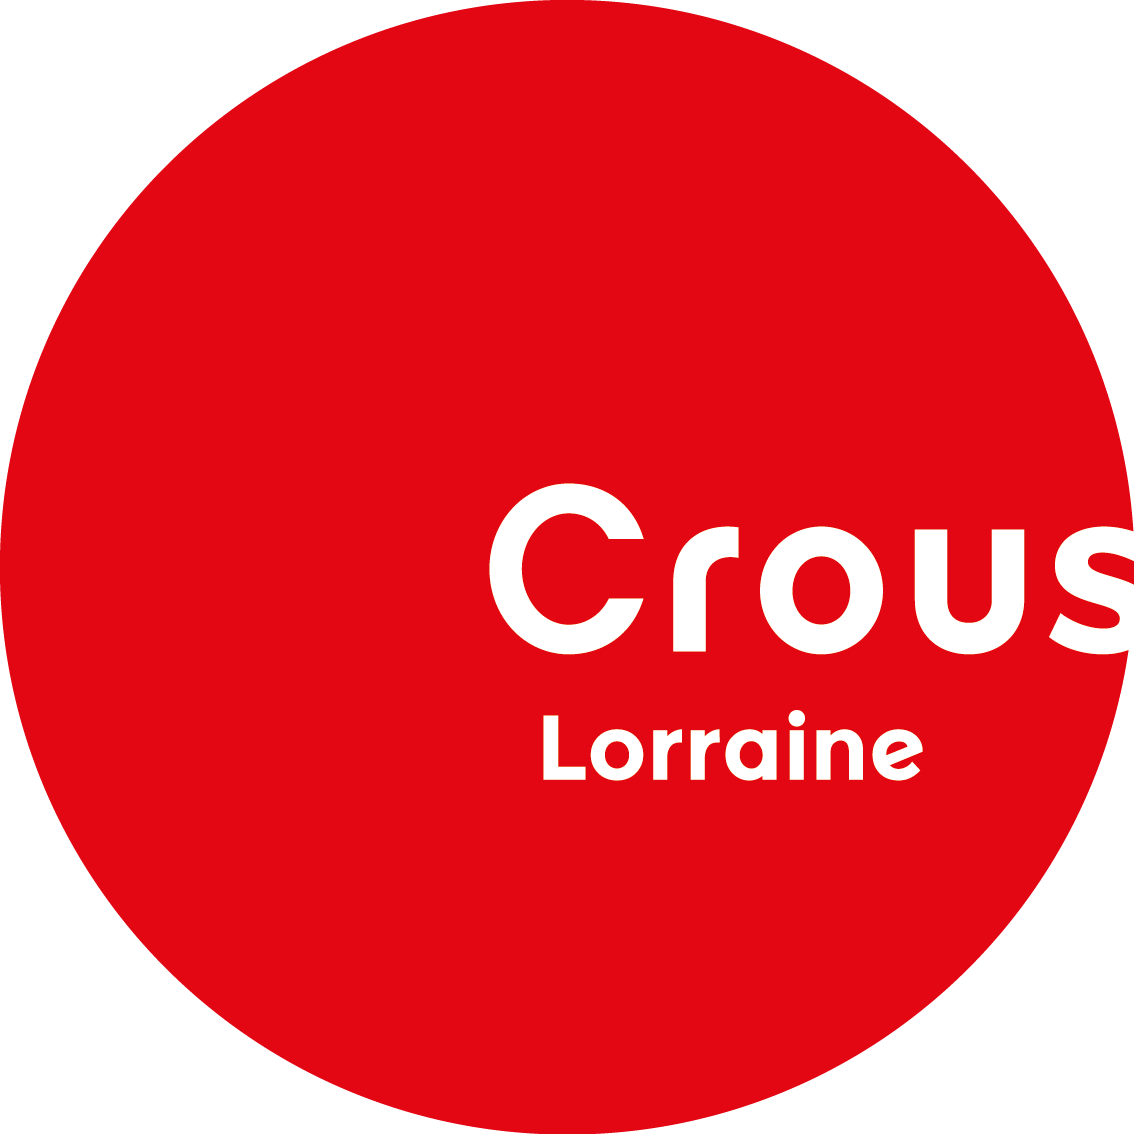 Crous Lorraine